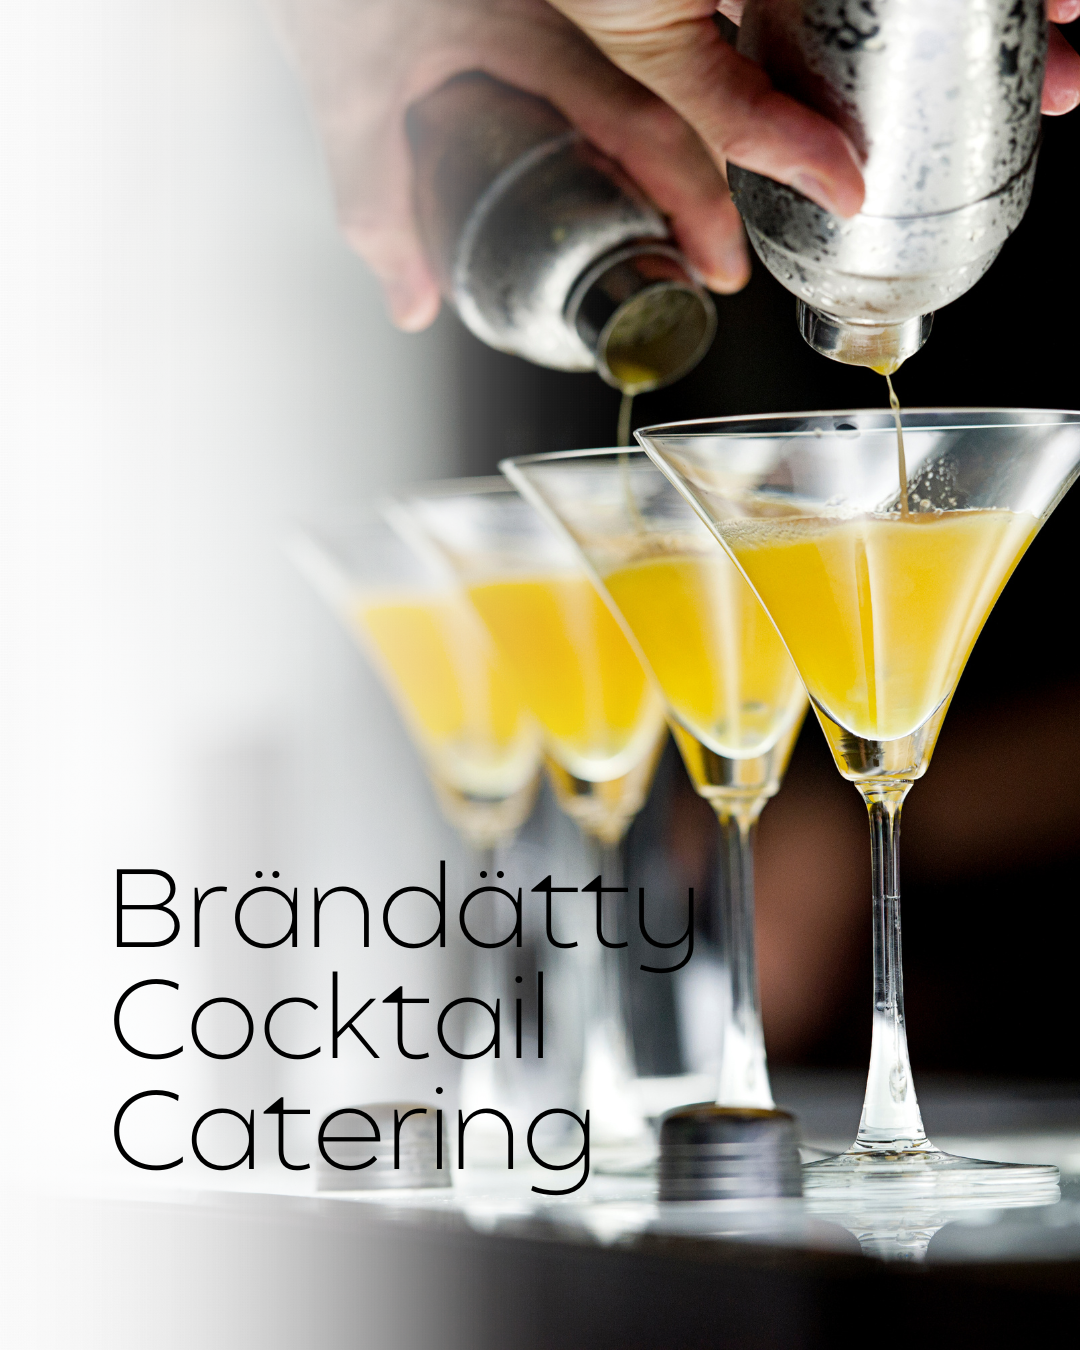 Your Bartender brändätty cocktail catering